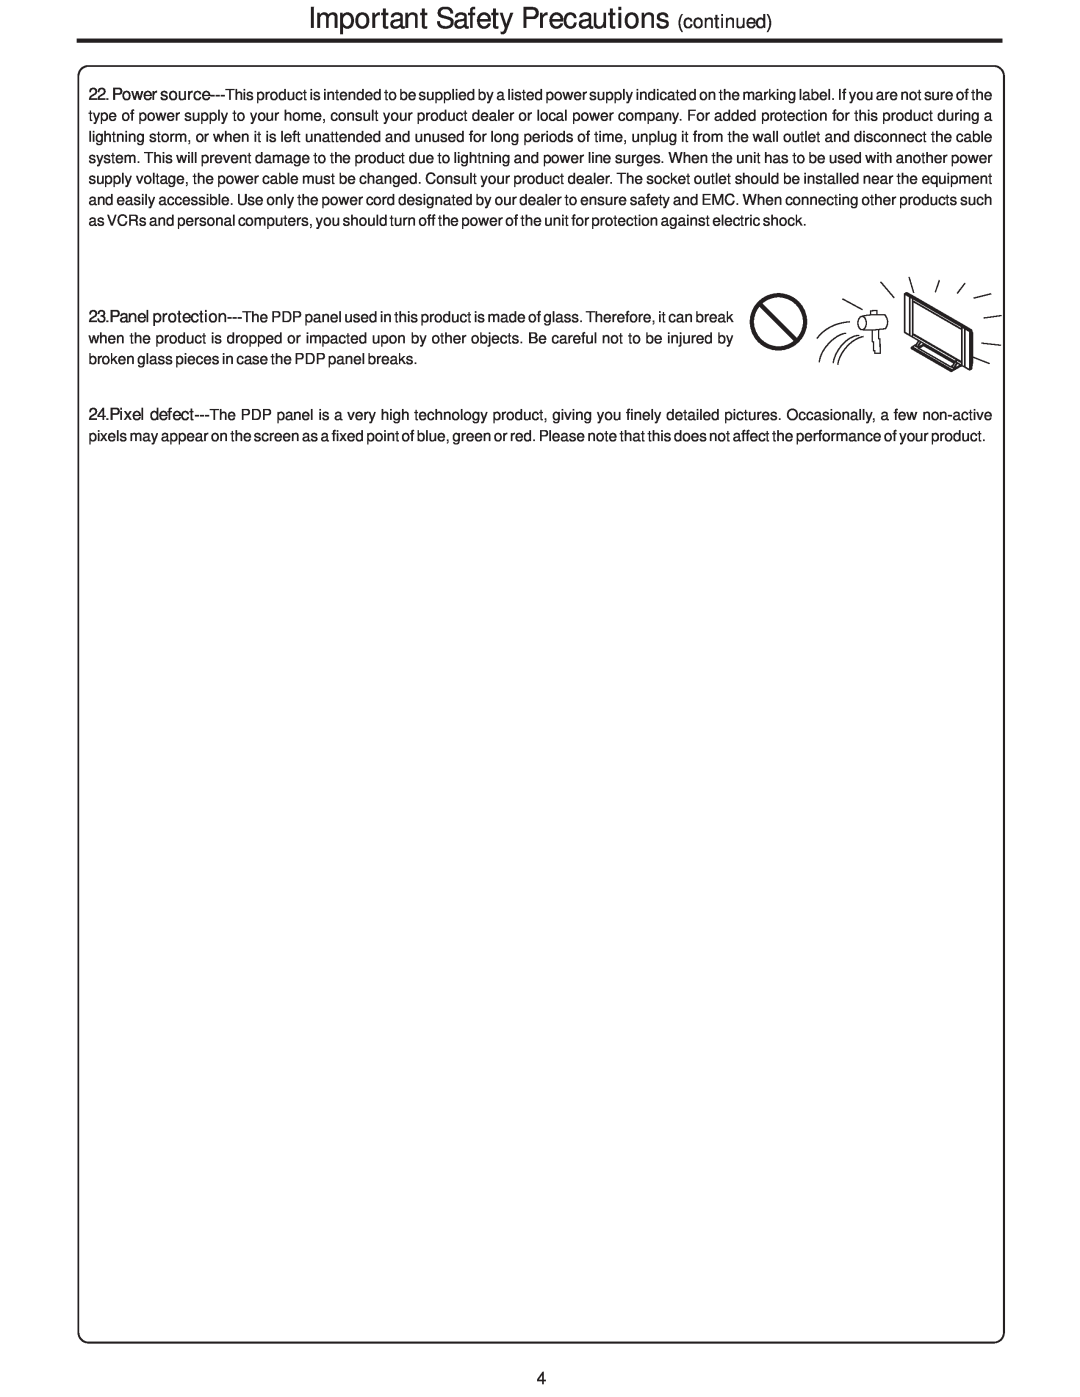 Polaroid PLA-4248 manual Important Safety Precautions continued 